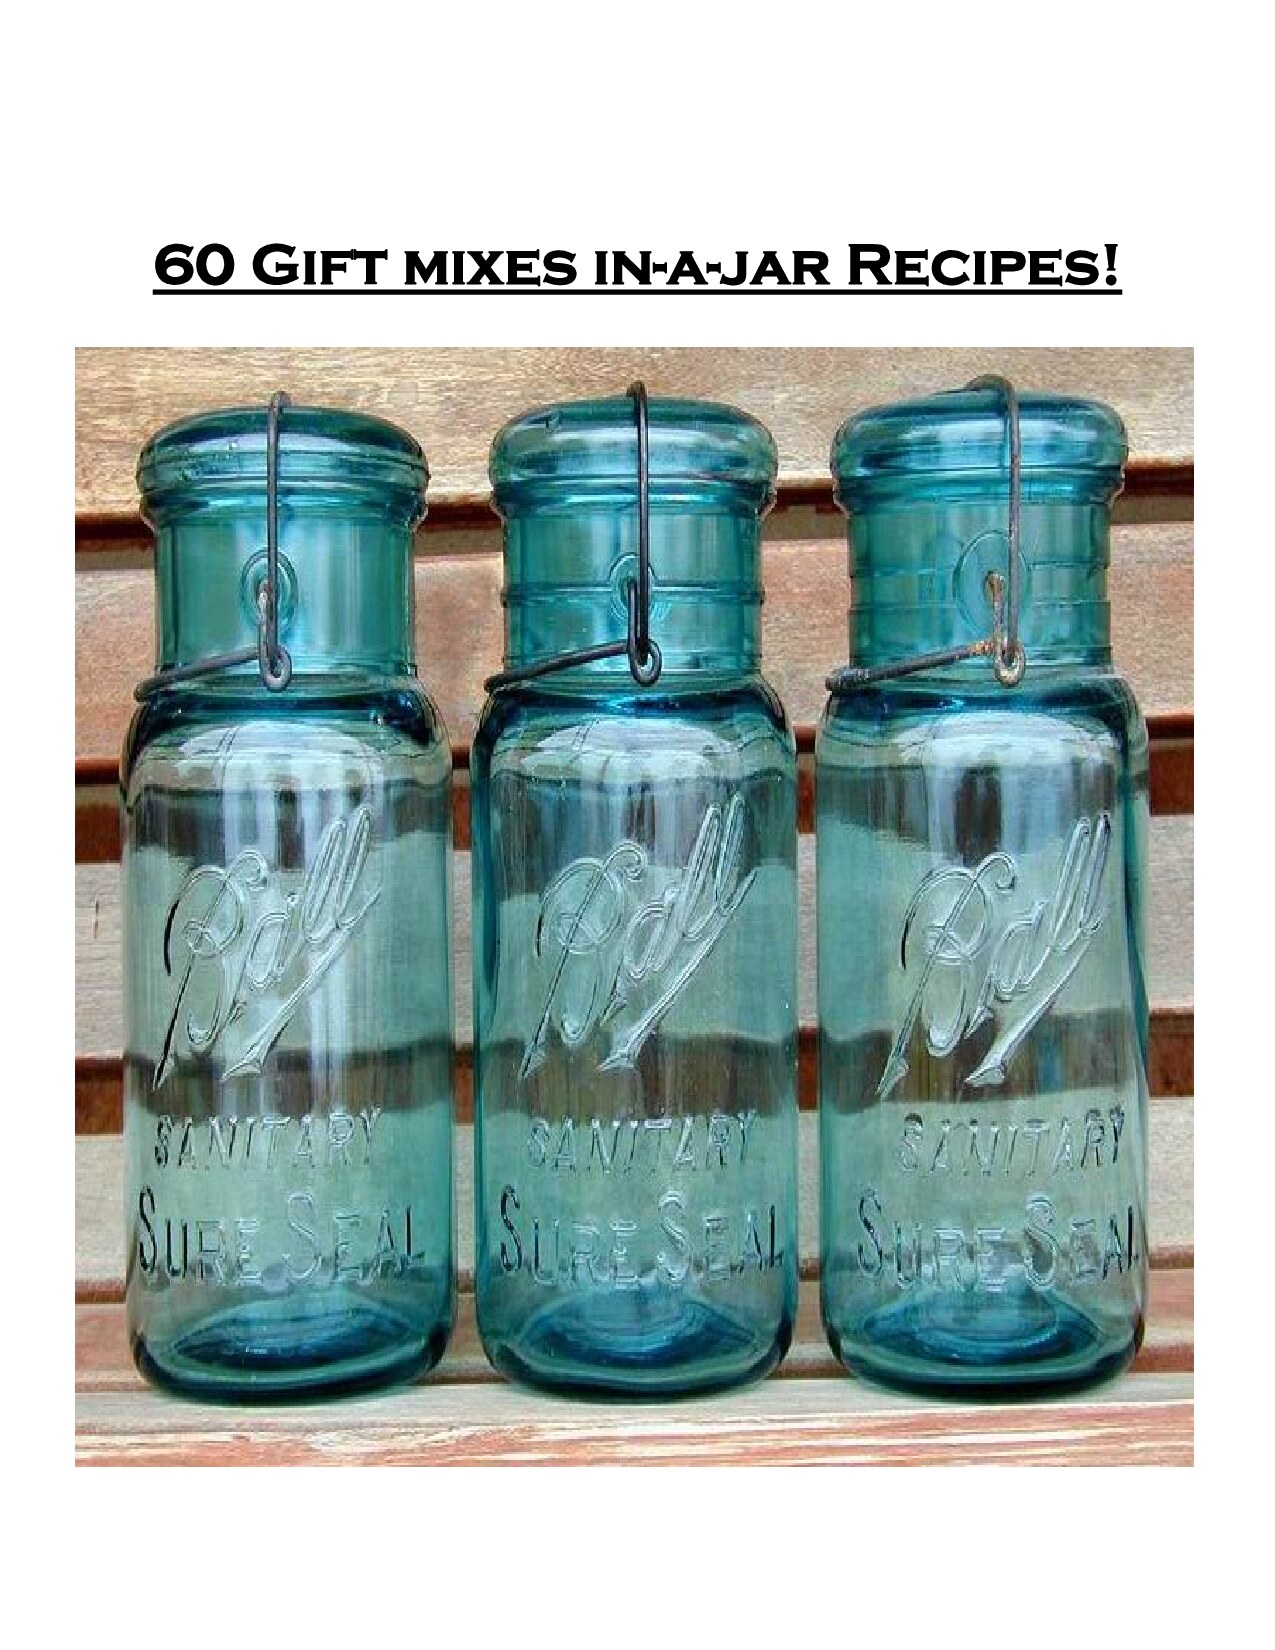 60 Gift Mixes in-a-jar Recipes